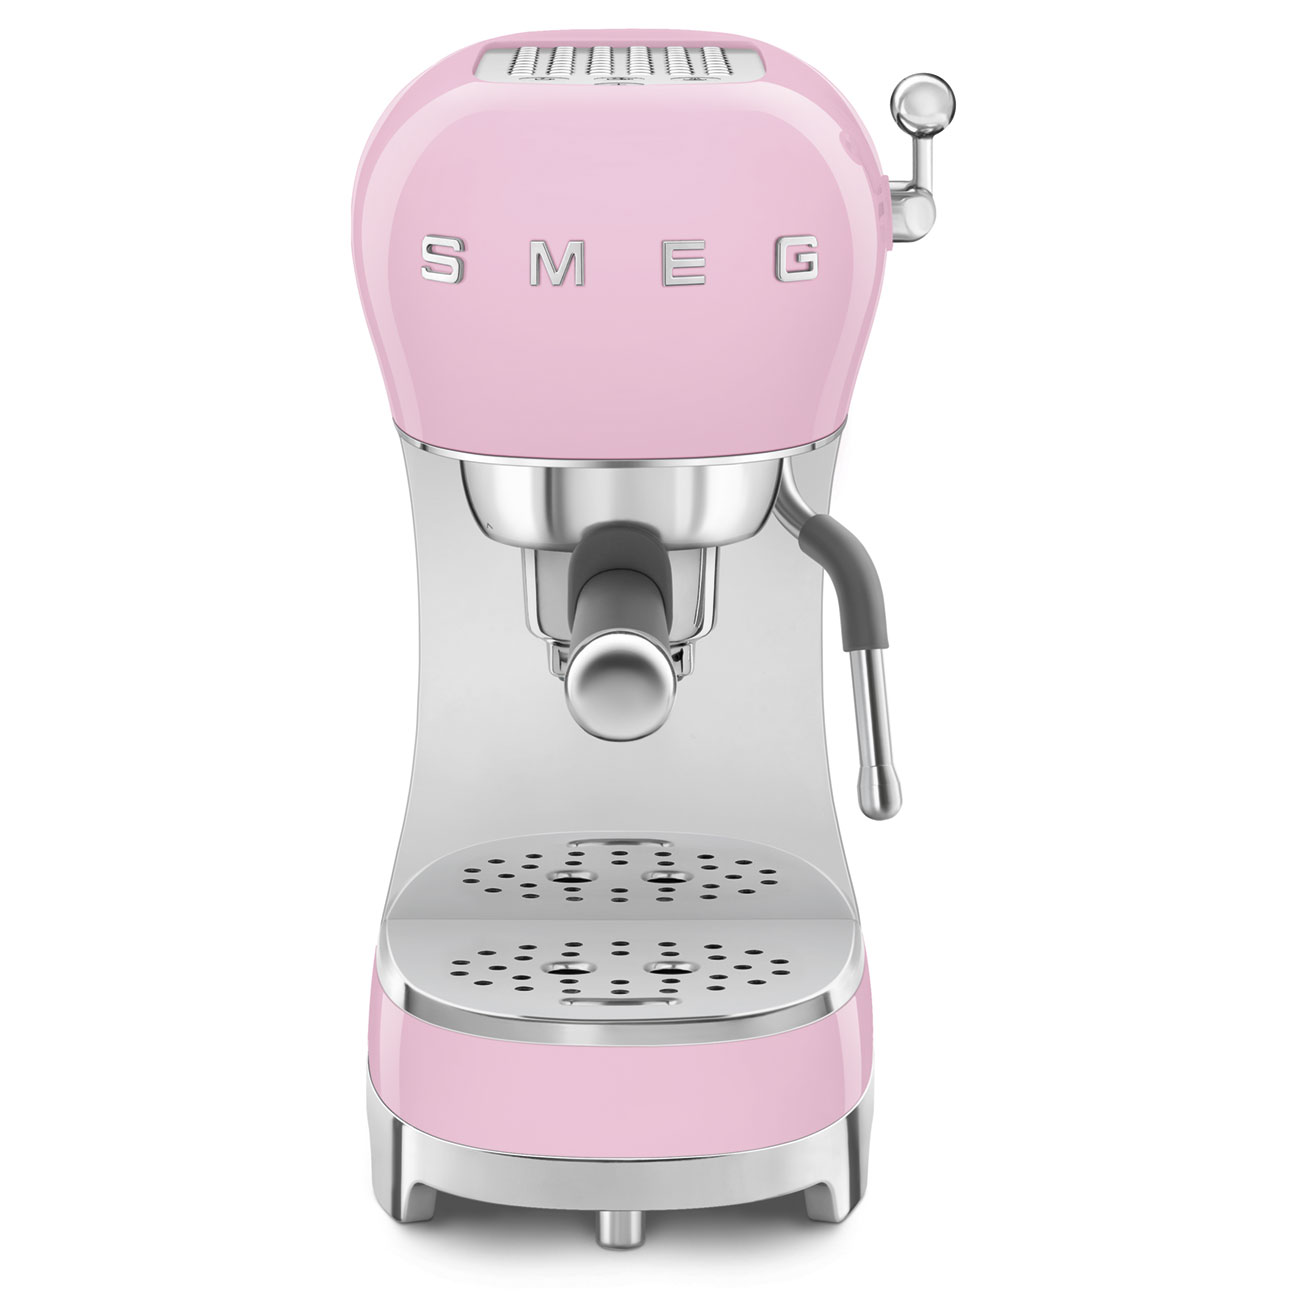 Smeg Pink Espresso Manual Coffee Machine with Steam Wand_1